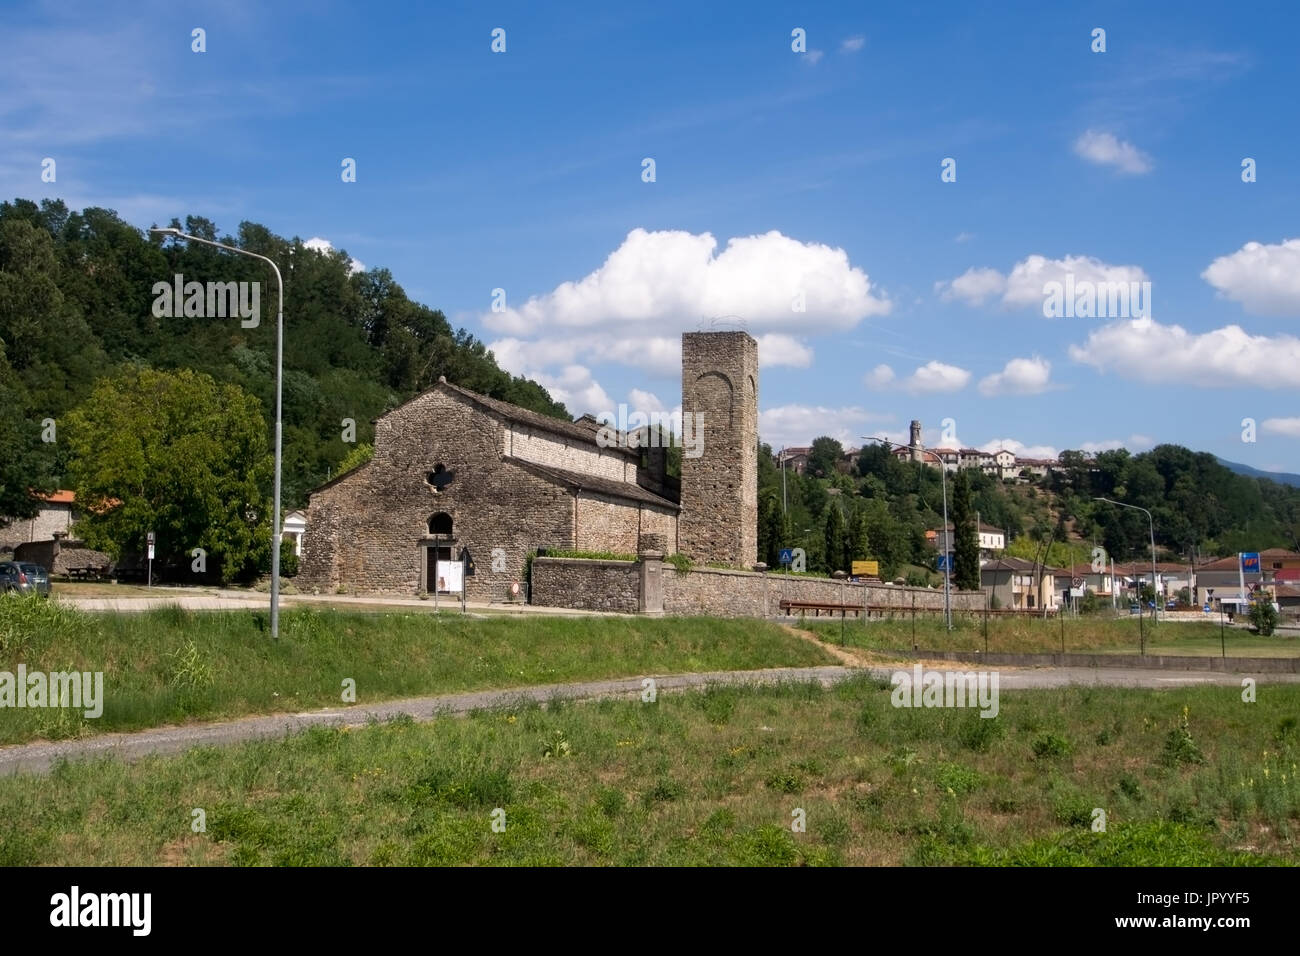 Pieve di Sorano, Filattera in Lunigiana, Italy.July 2017 Stockfoto